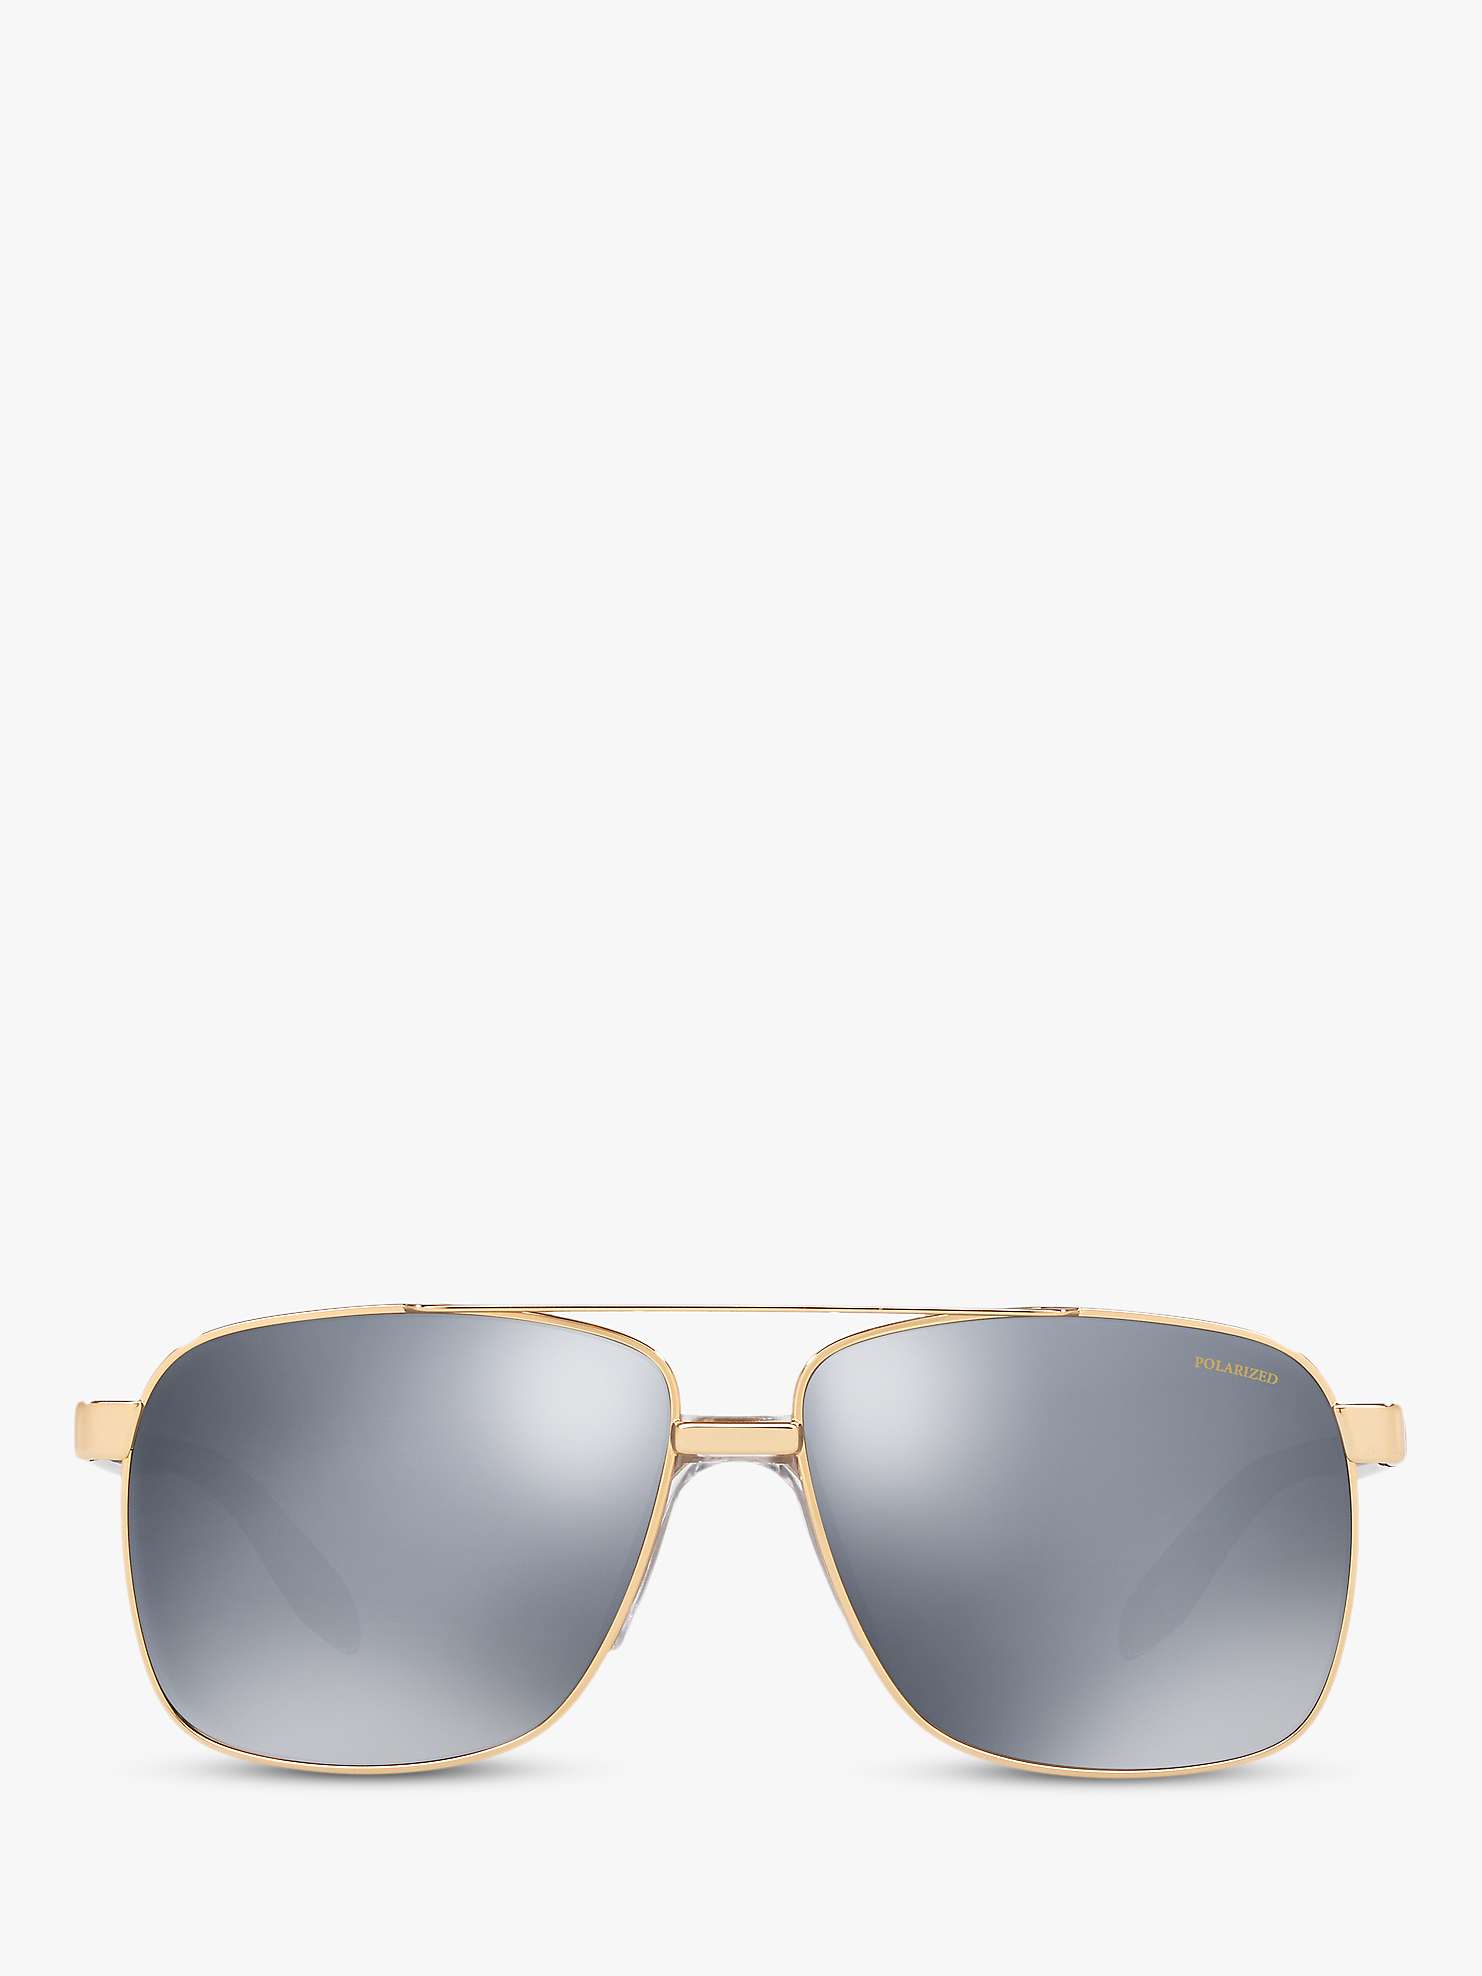 Buy Versace VE2174 Men's Polarised Square Sunglasses, Gold/Mirror Grey Online at johnlewis.com